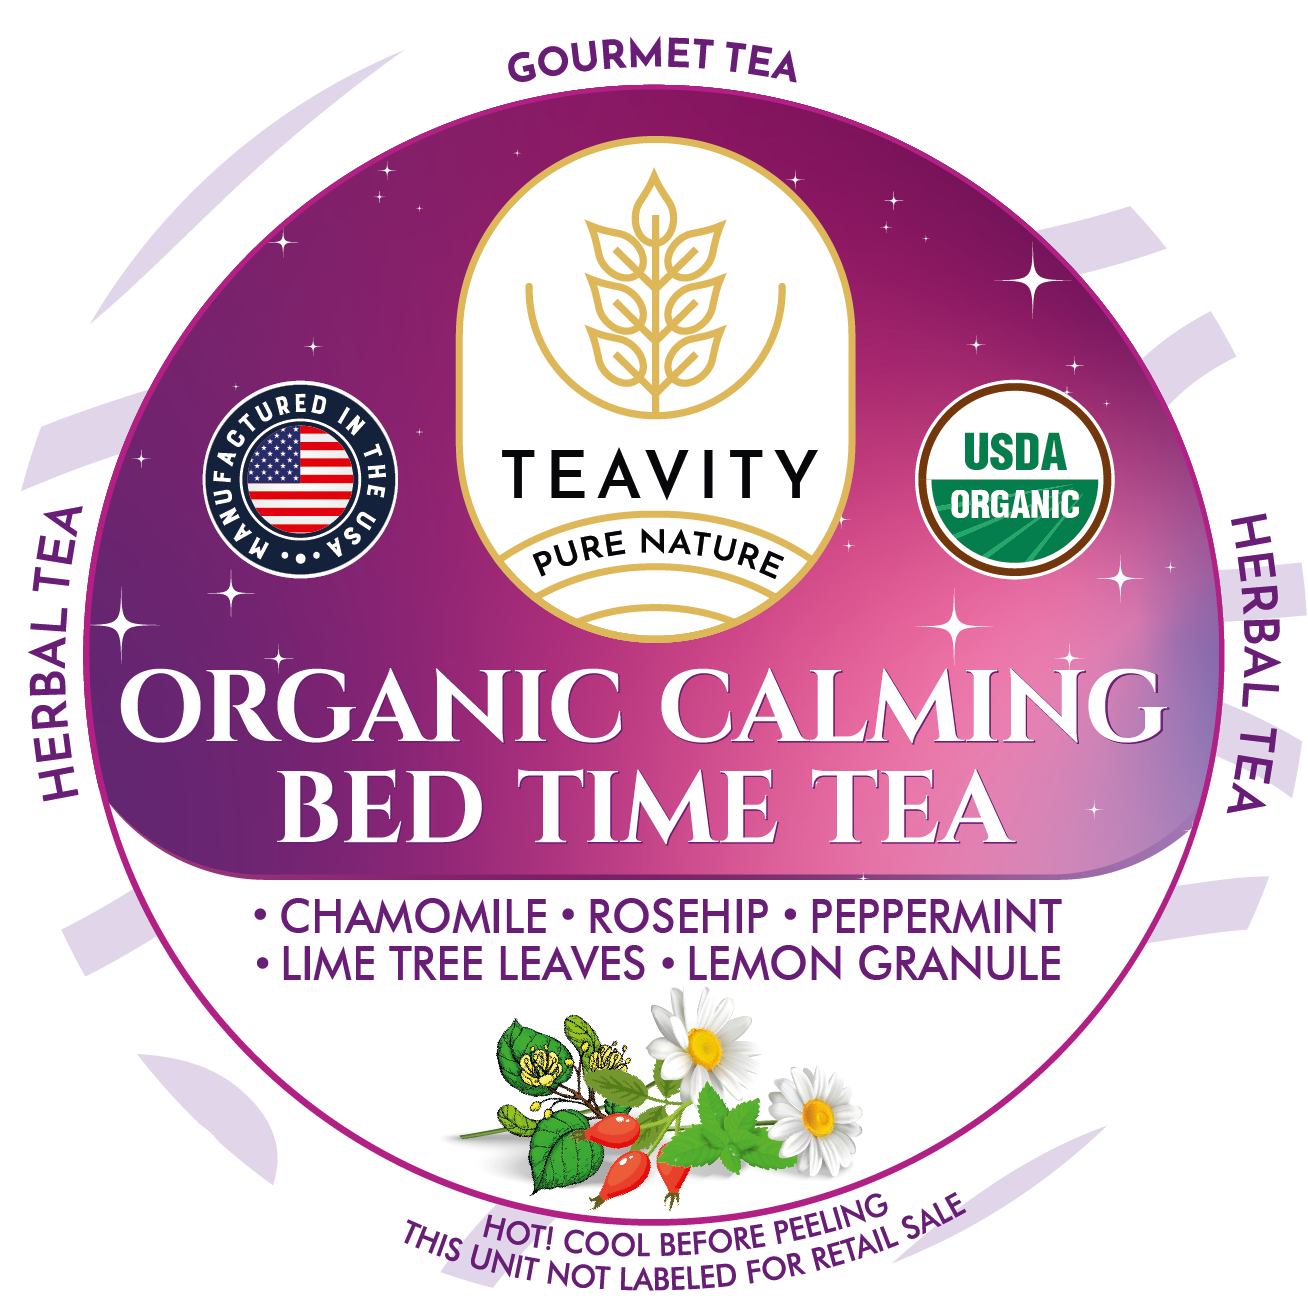 Organic Calming Bed Time Tea